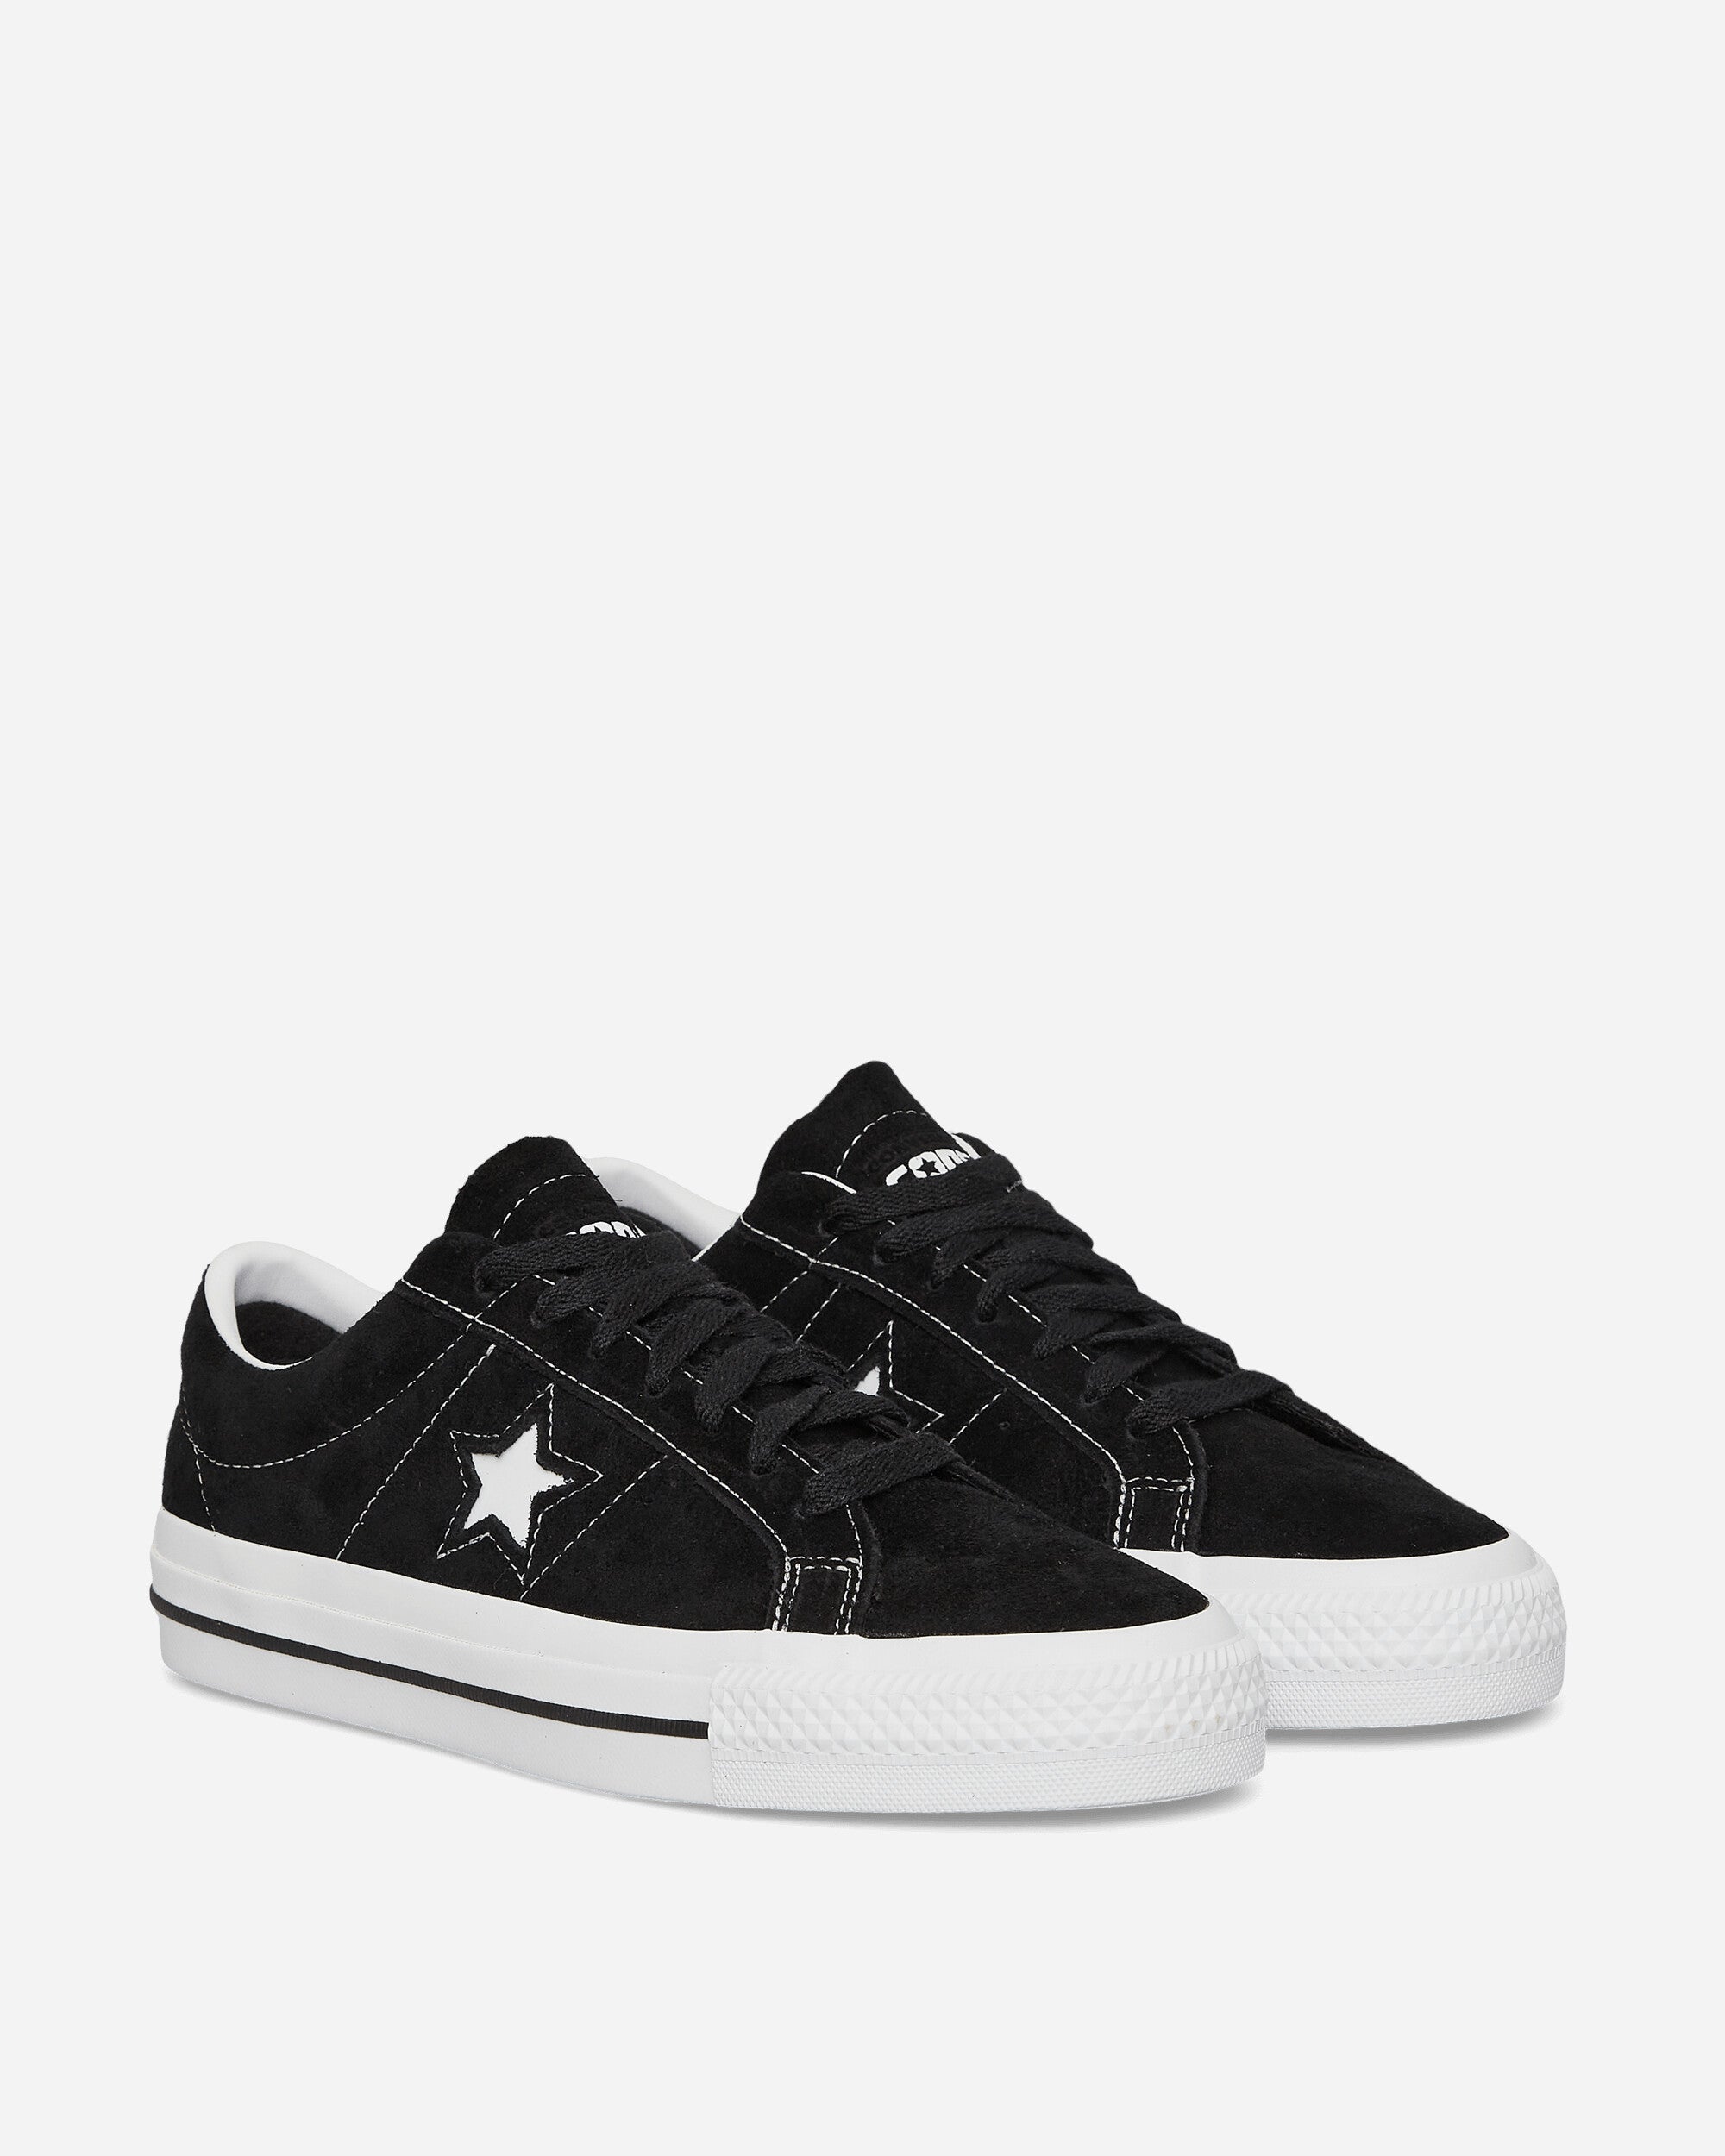 Converse One Star Pro Black/Black/White Sneakers Low 171327CW